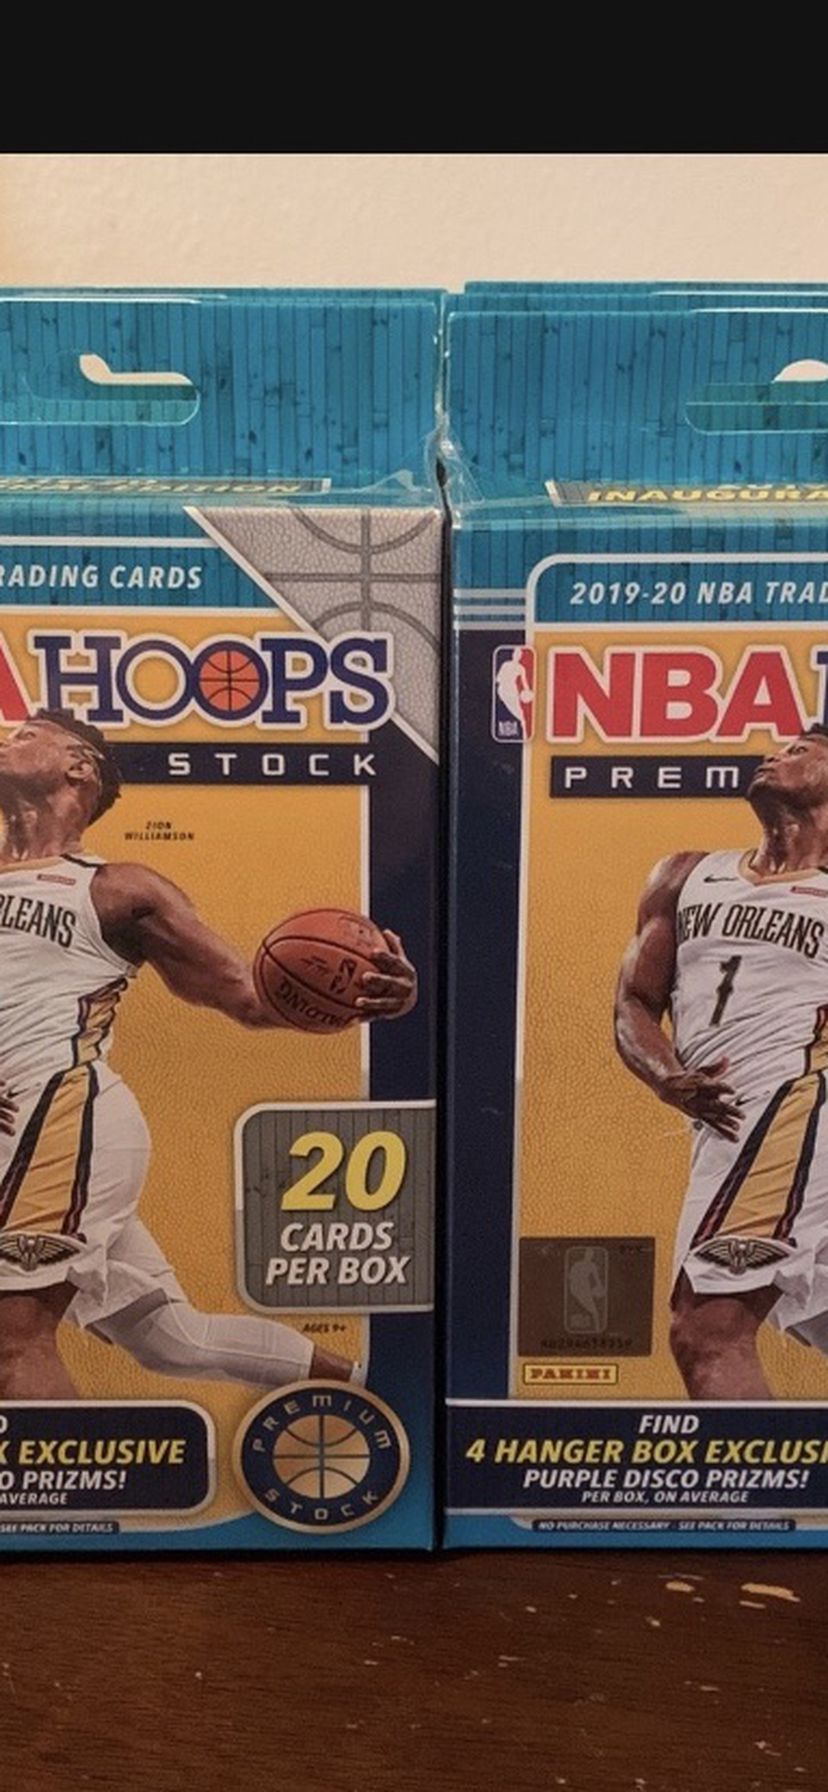 NBA Hoops Hangers